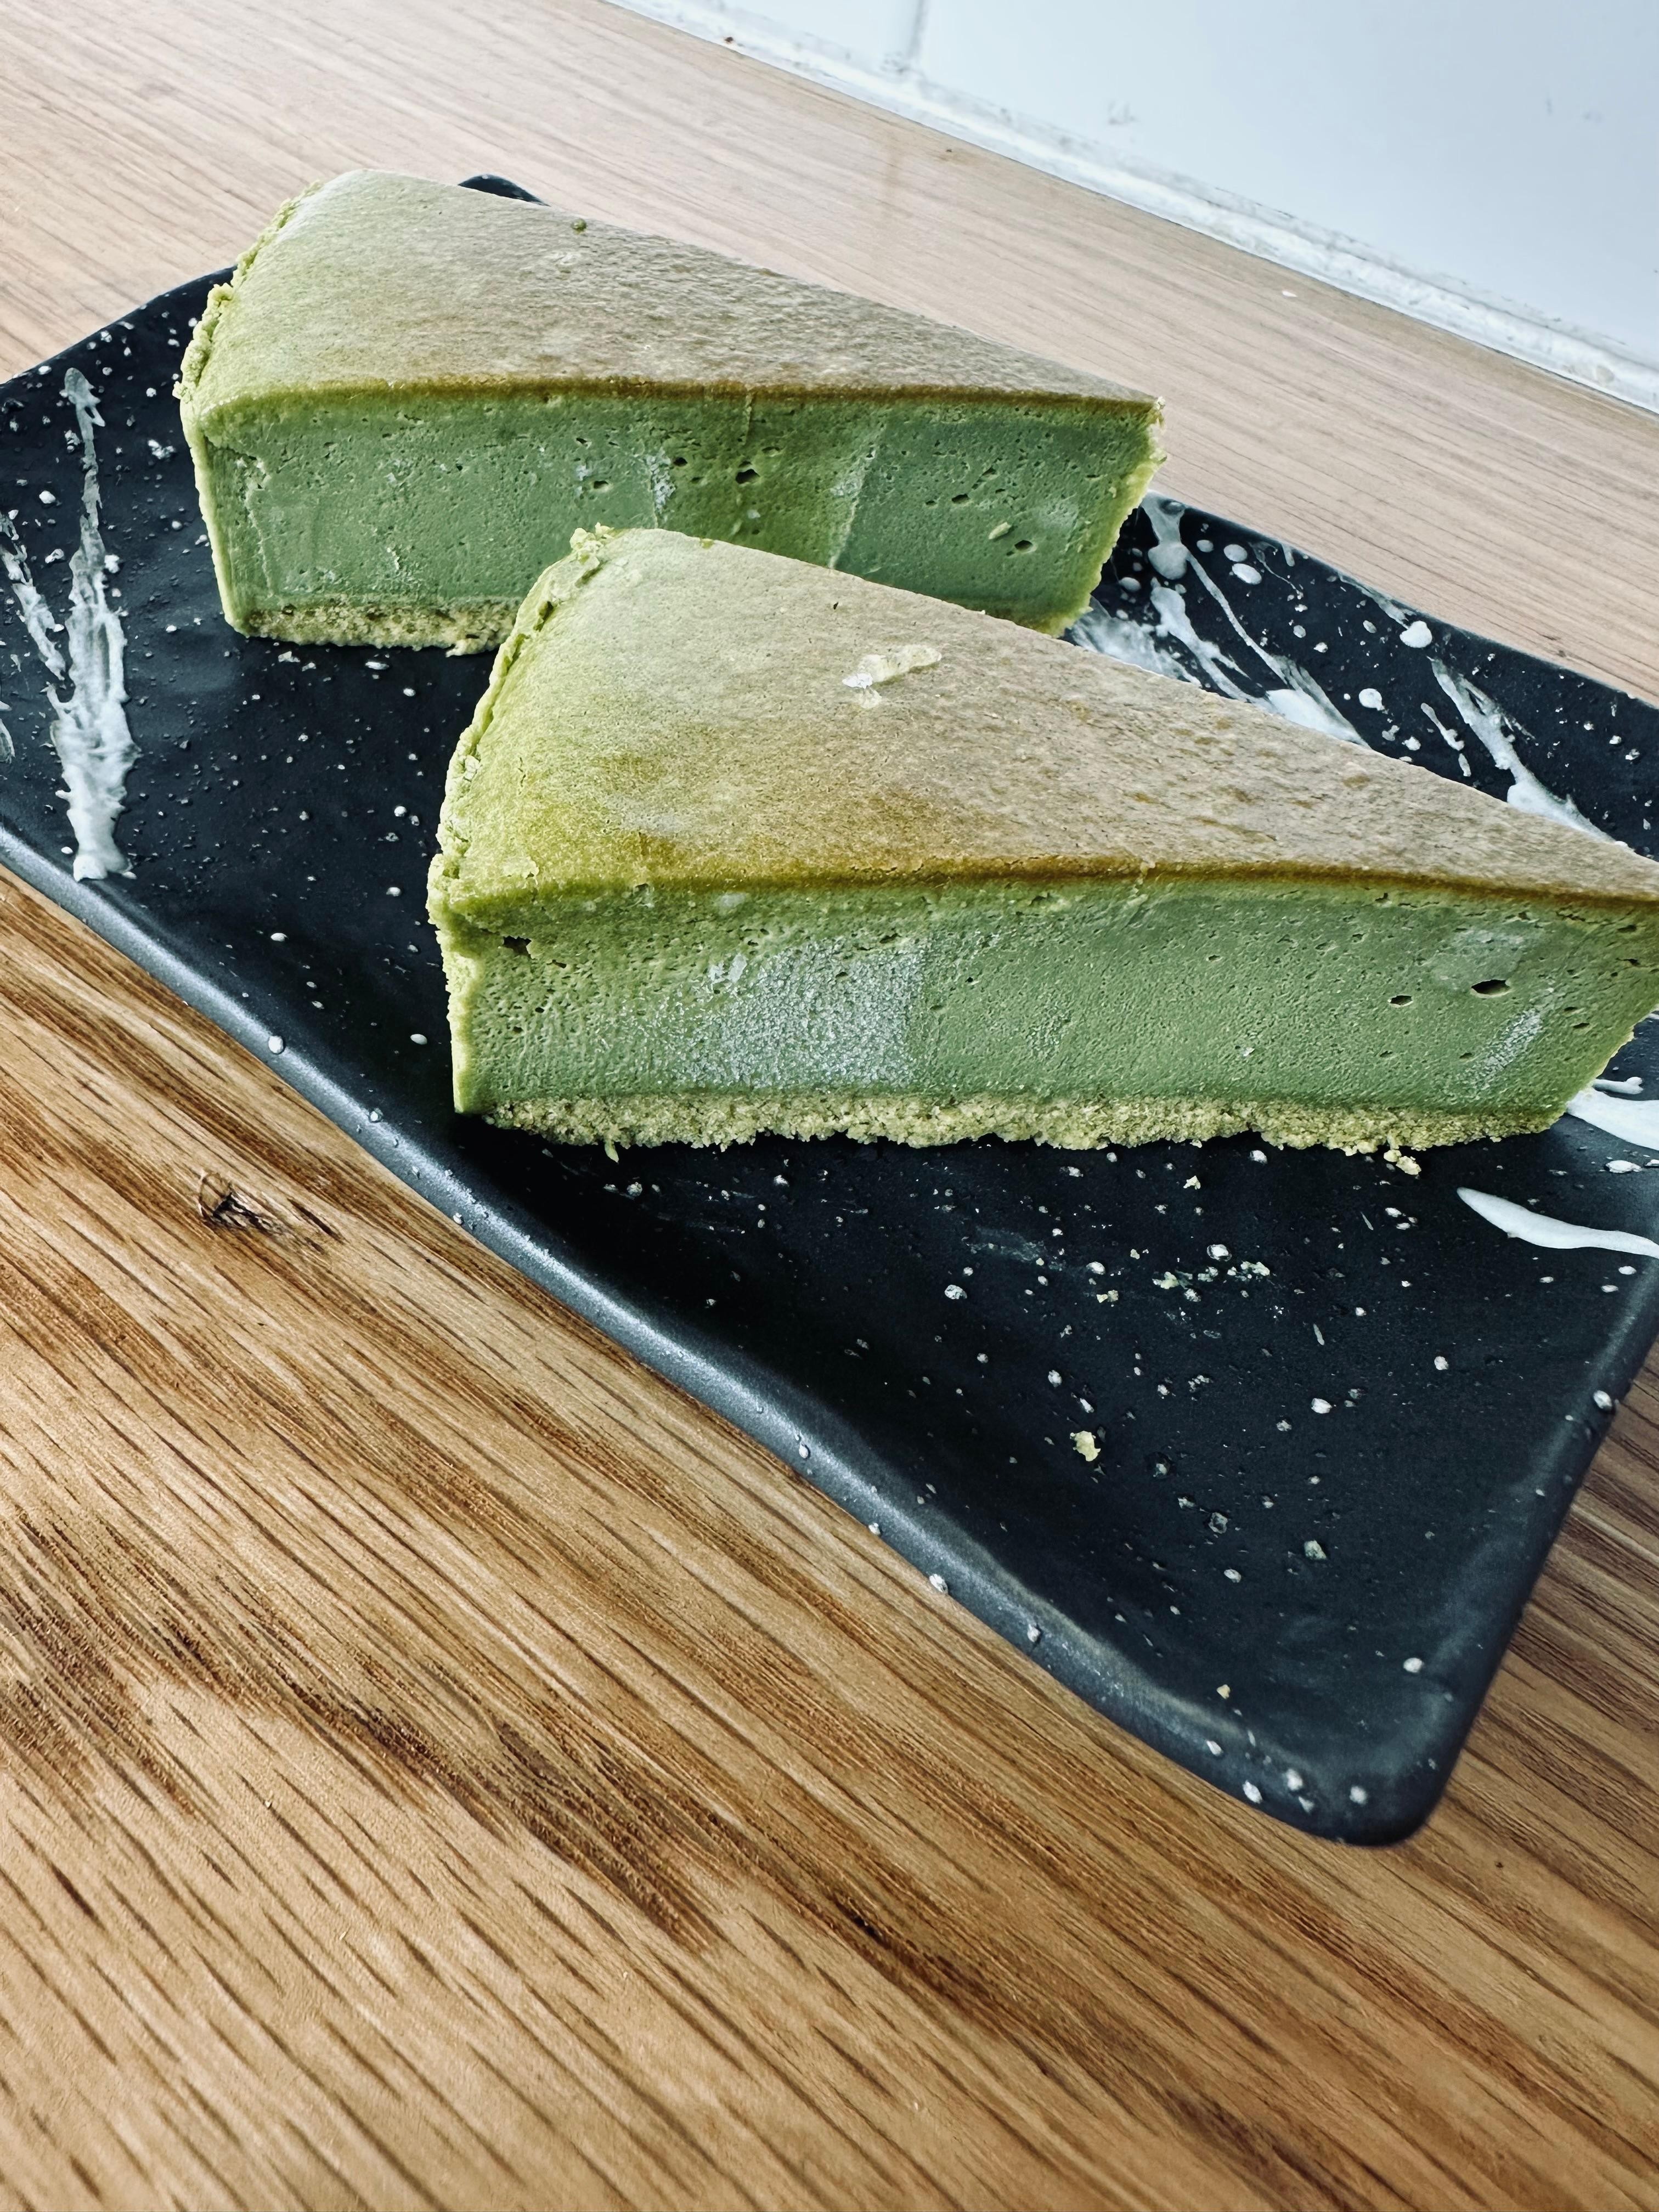 BAKED GREEN TEA CHEESECAKE